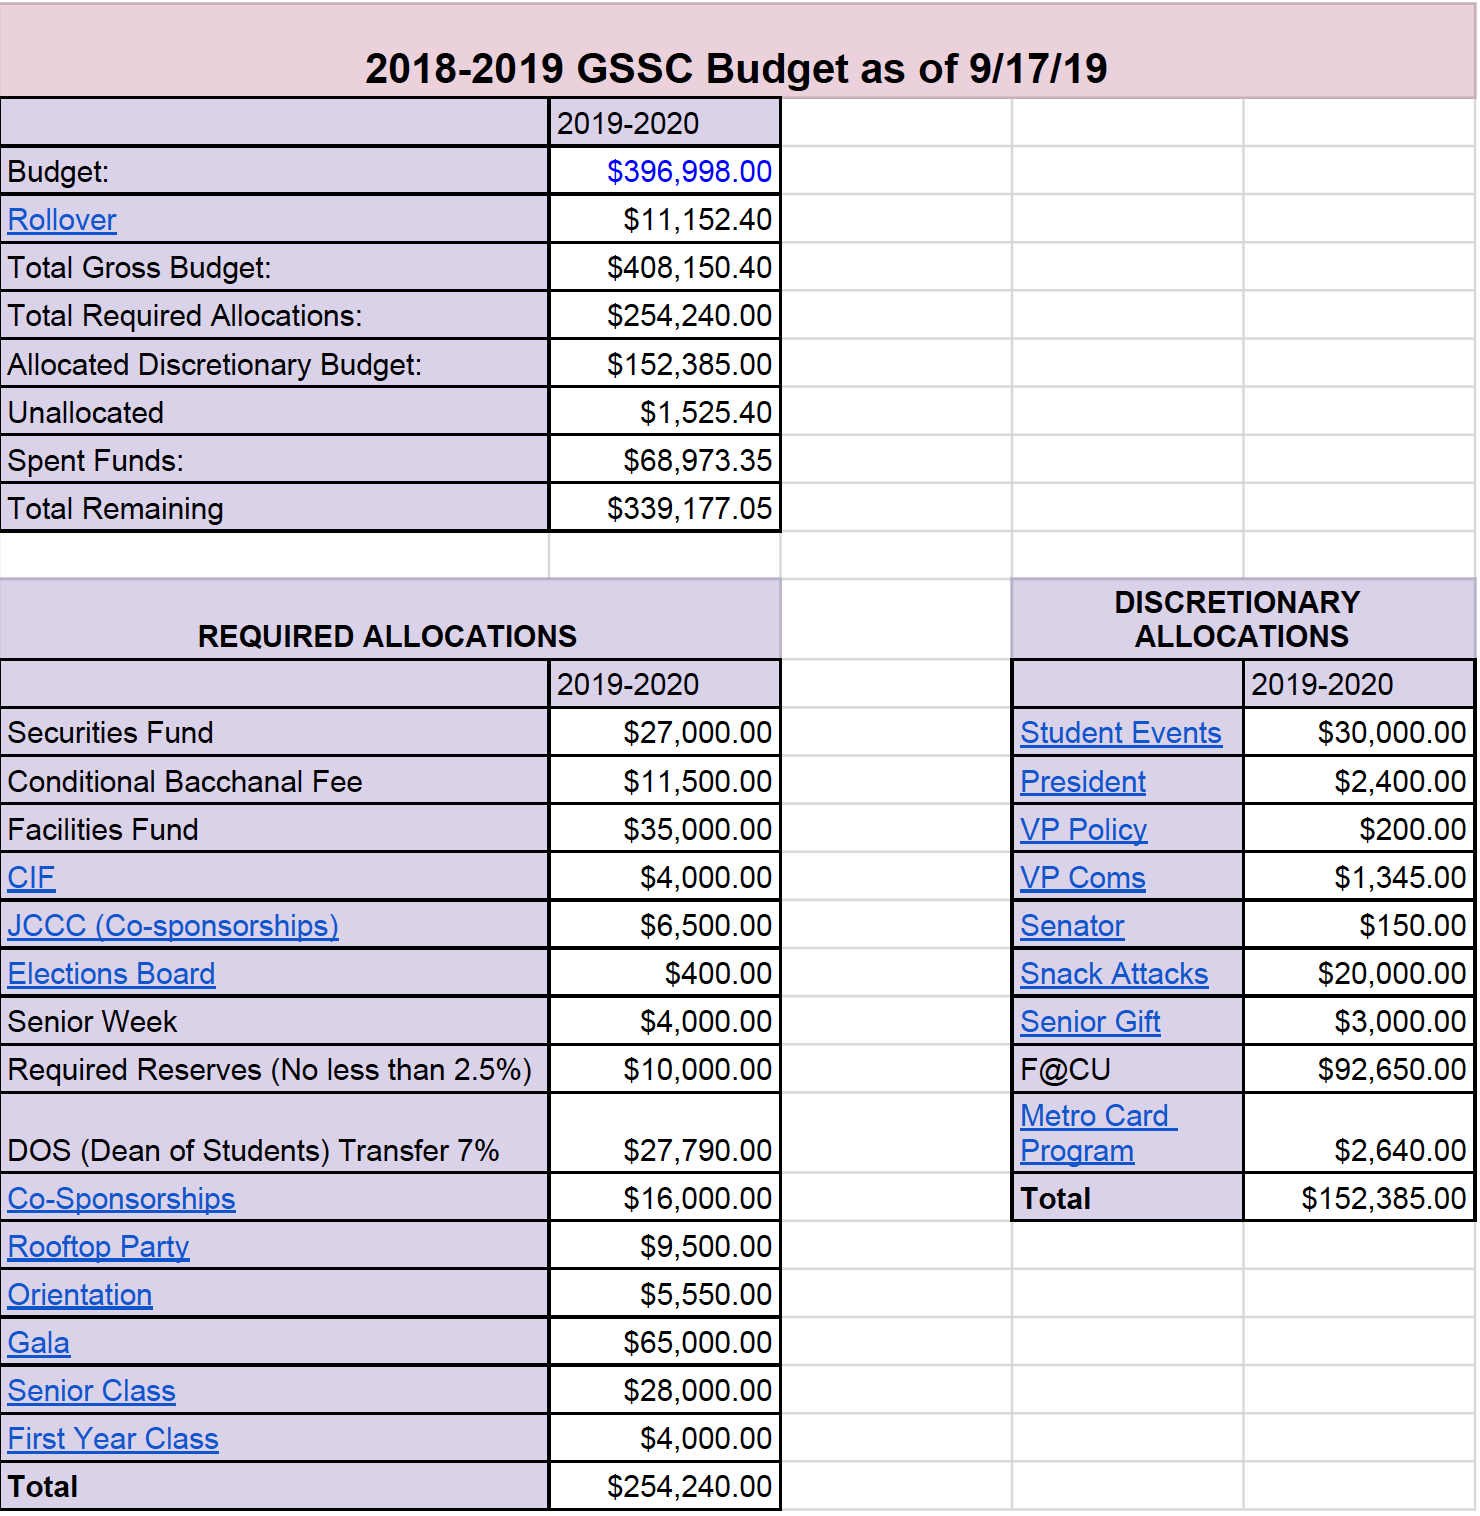 Budget 2019-2020